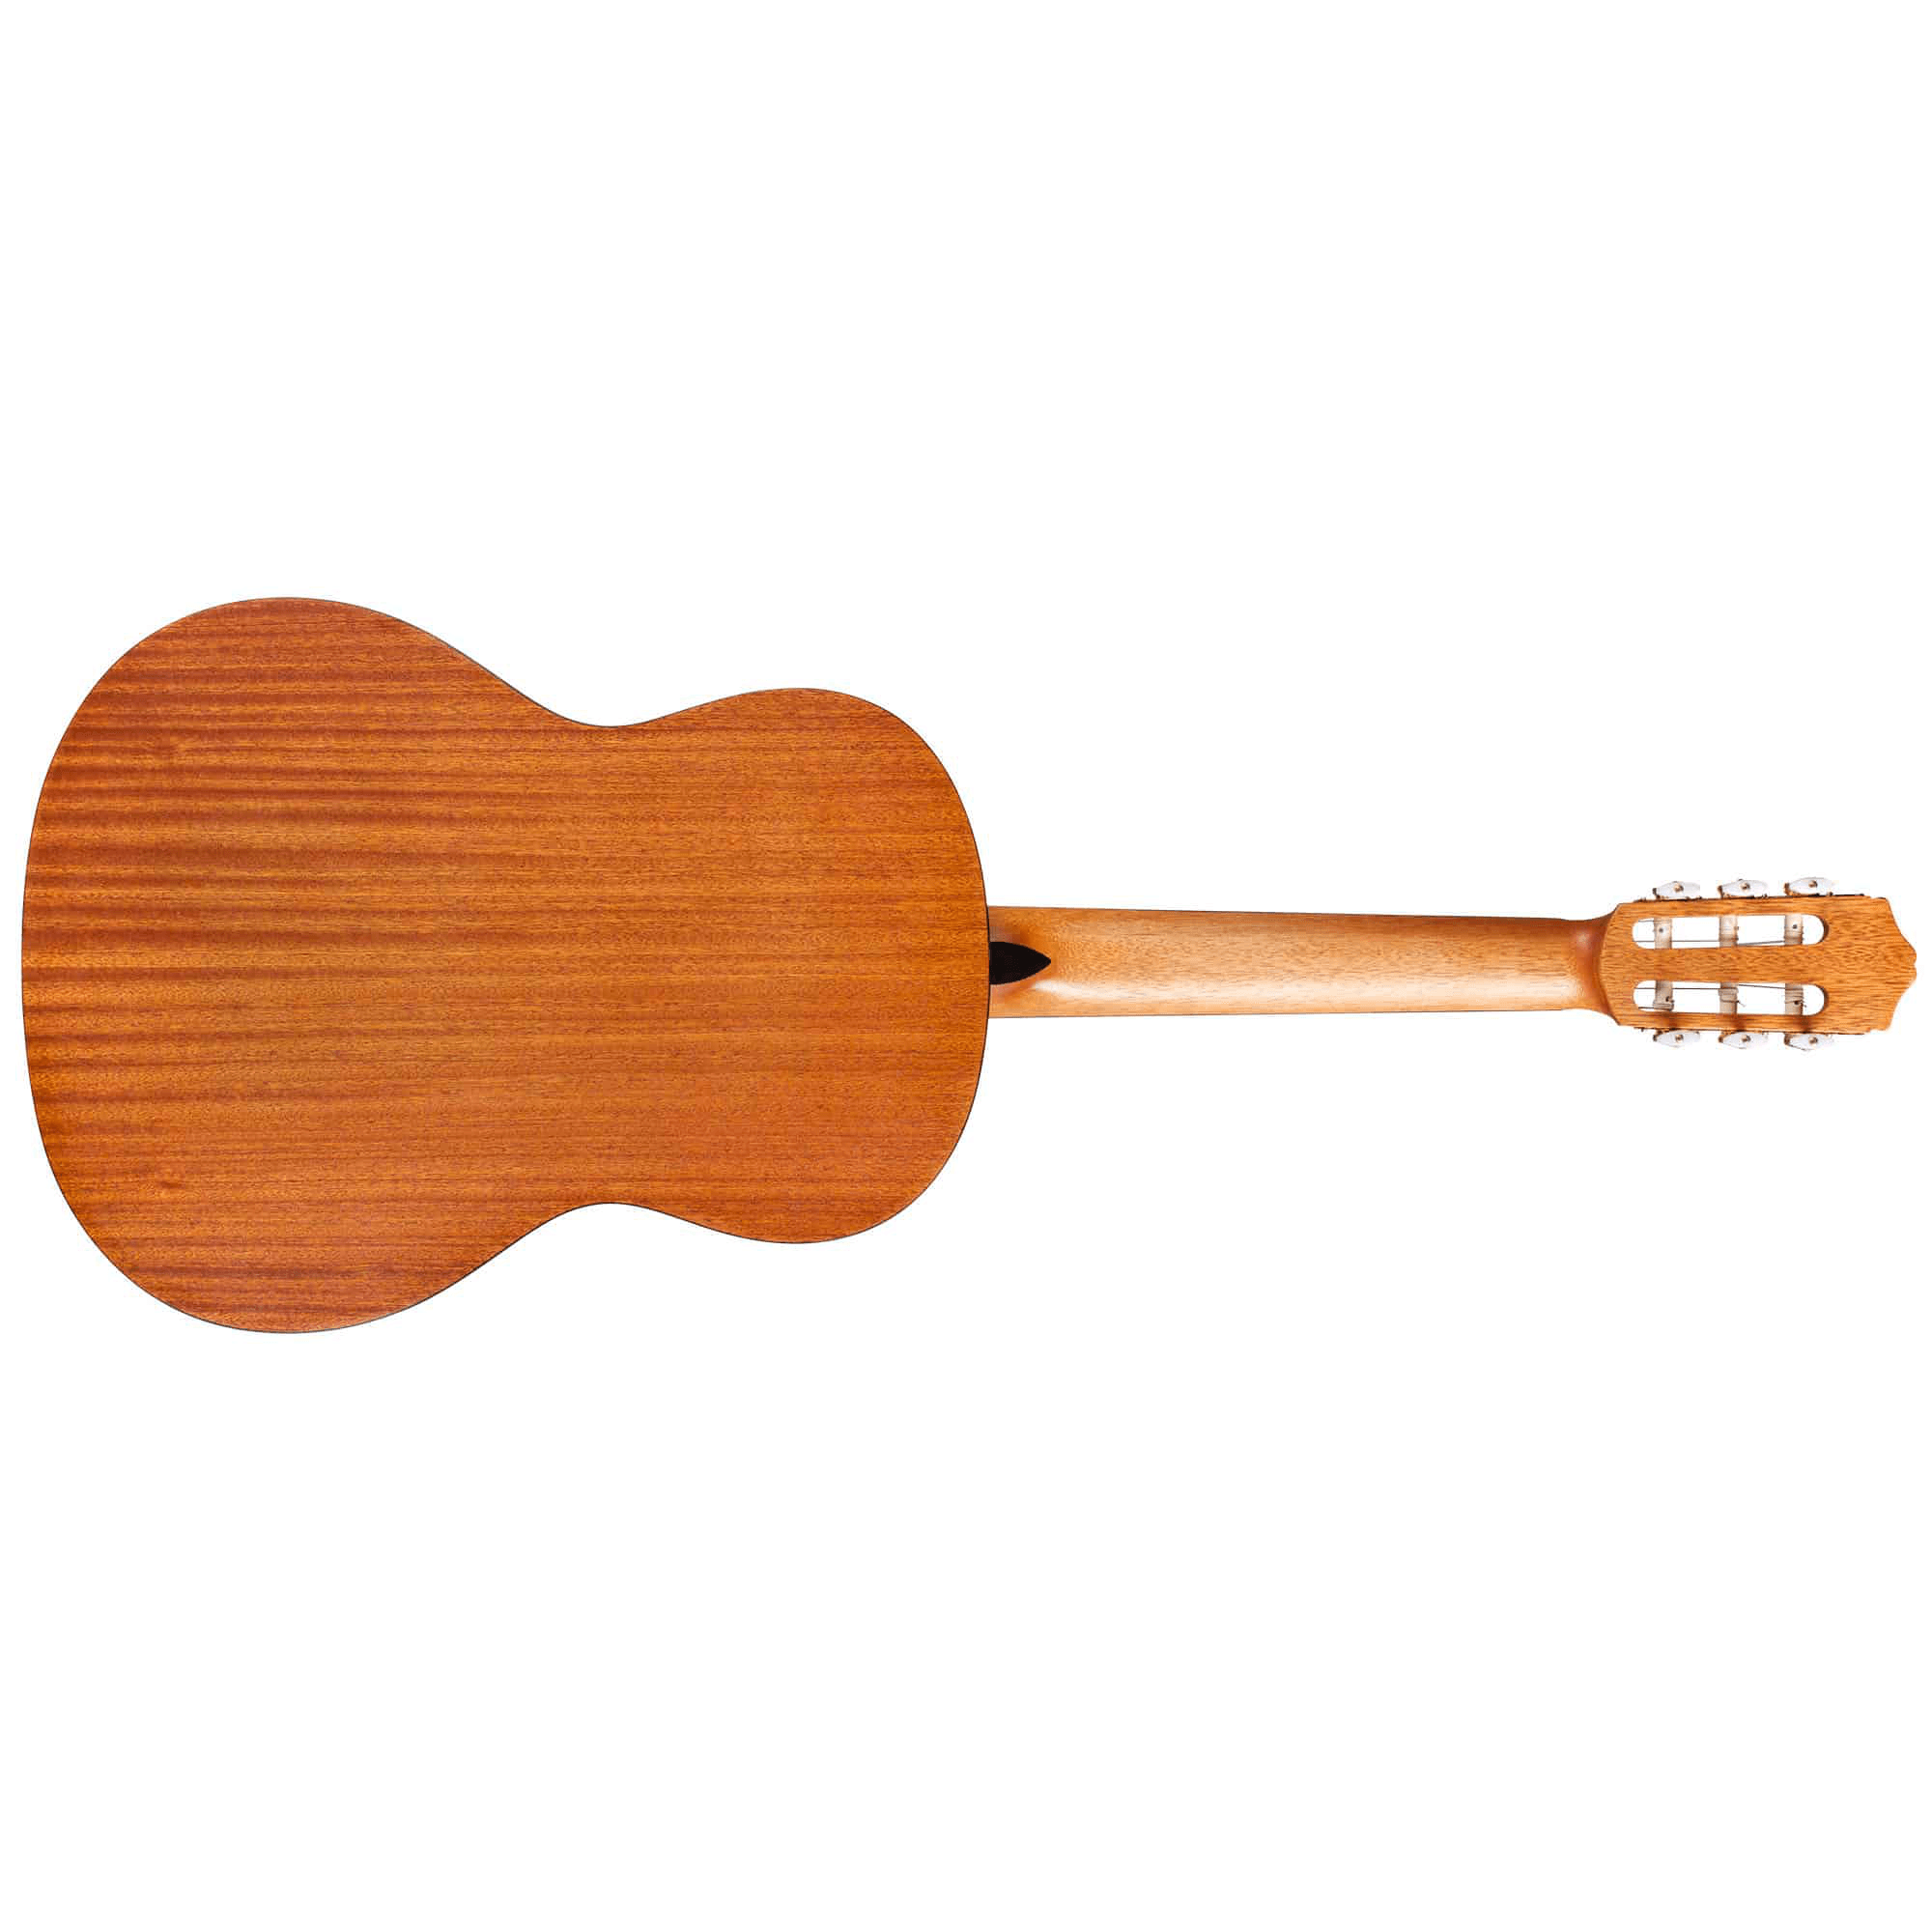 Cordoba - Protege C1M Full Size Classical Spruce Top - Guitars - Classical by Cordoba at Muso's Stuff